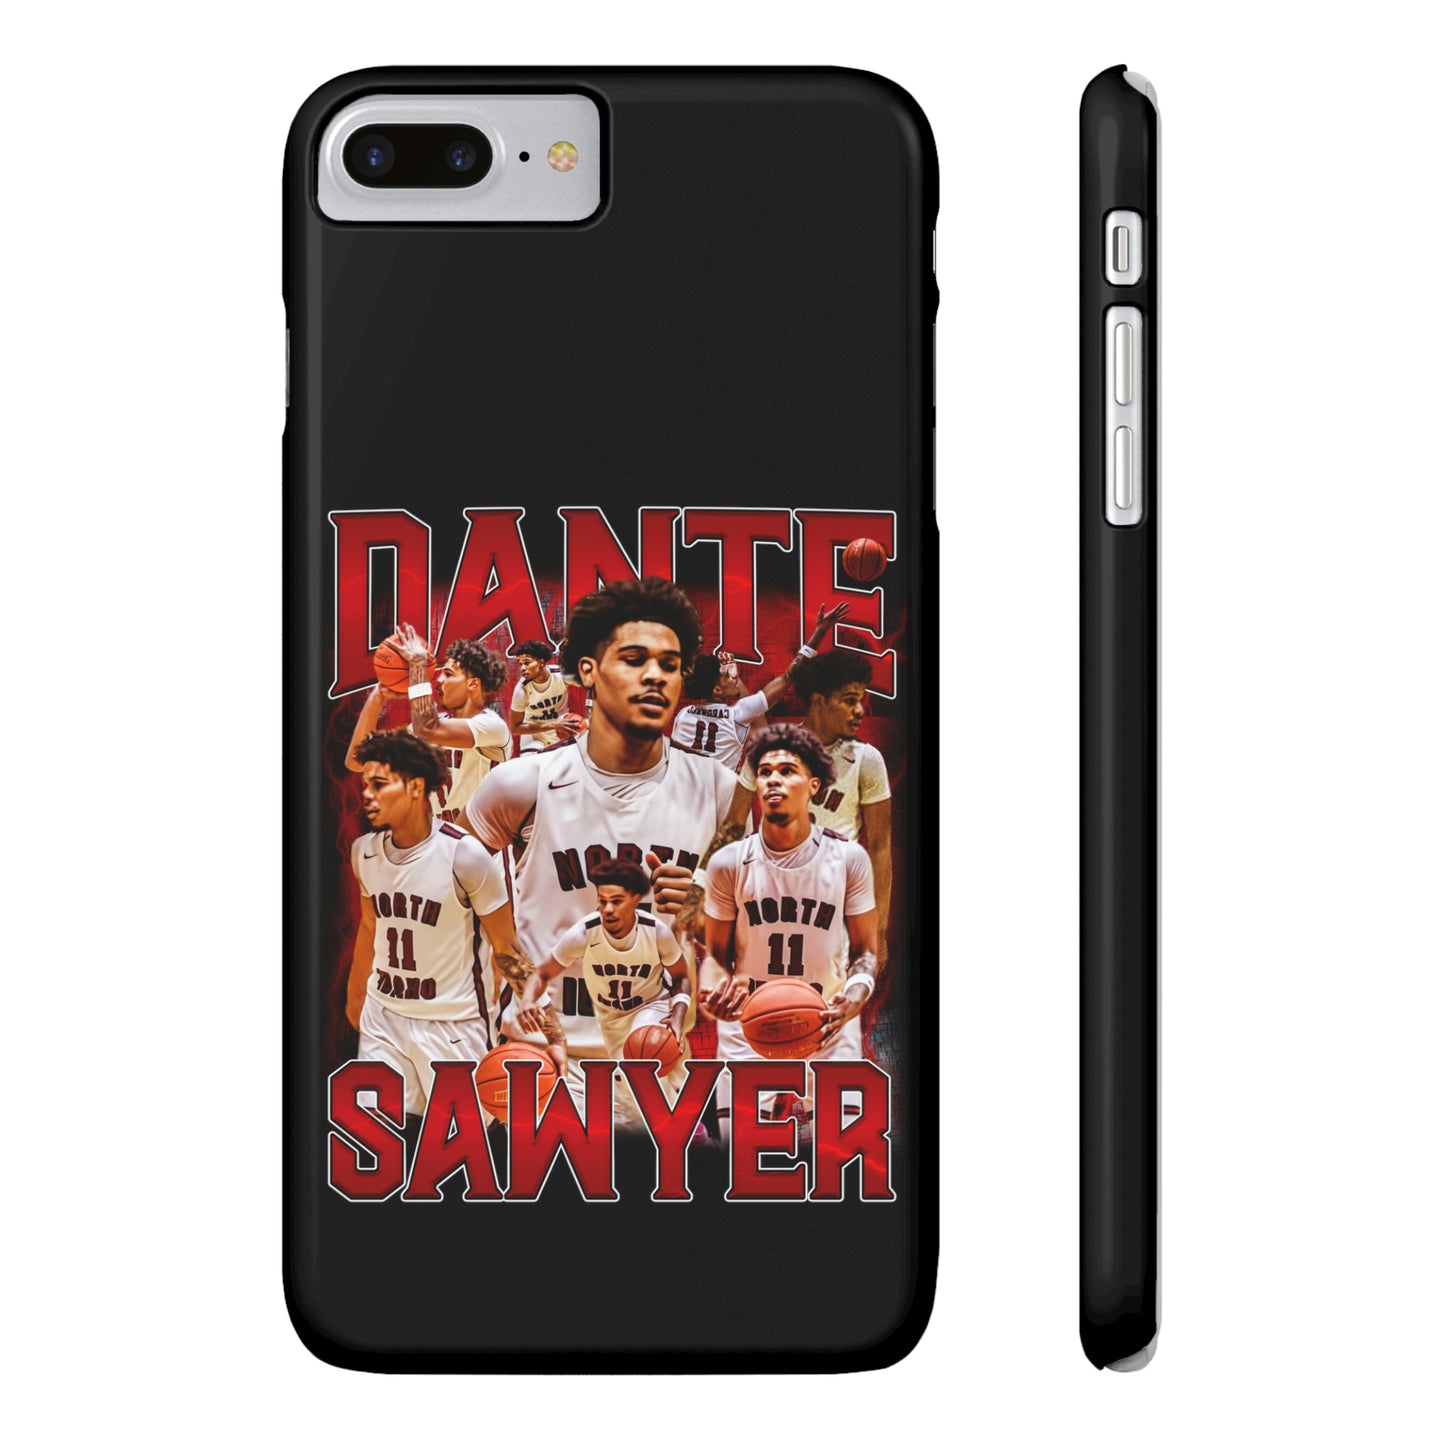 Dante Sawyer Slim Phone Cases